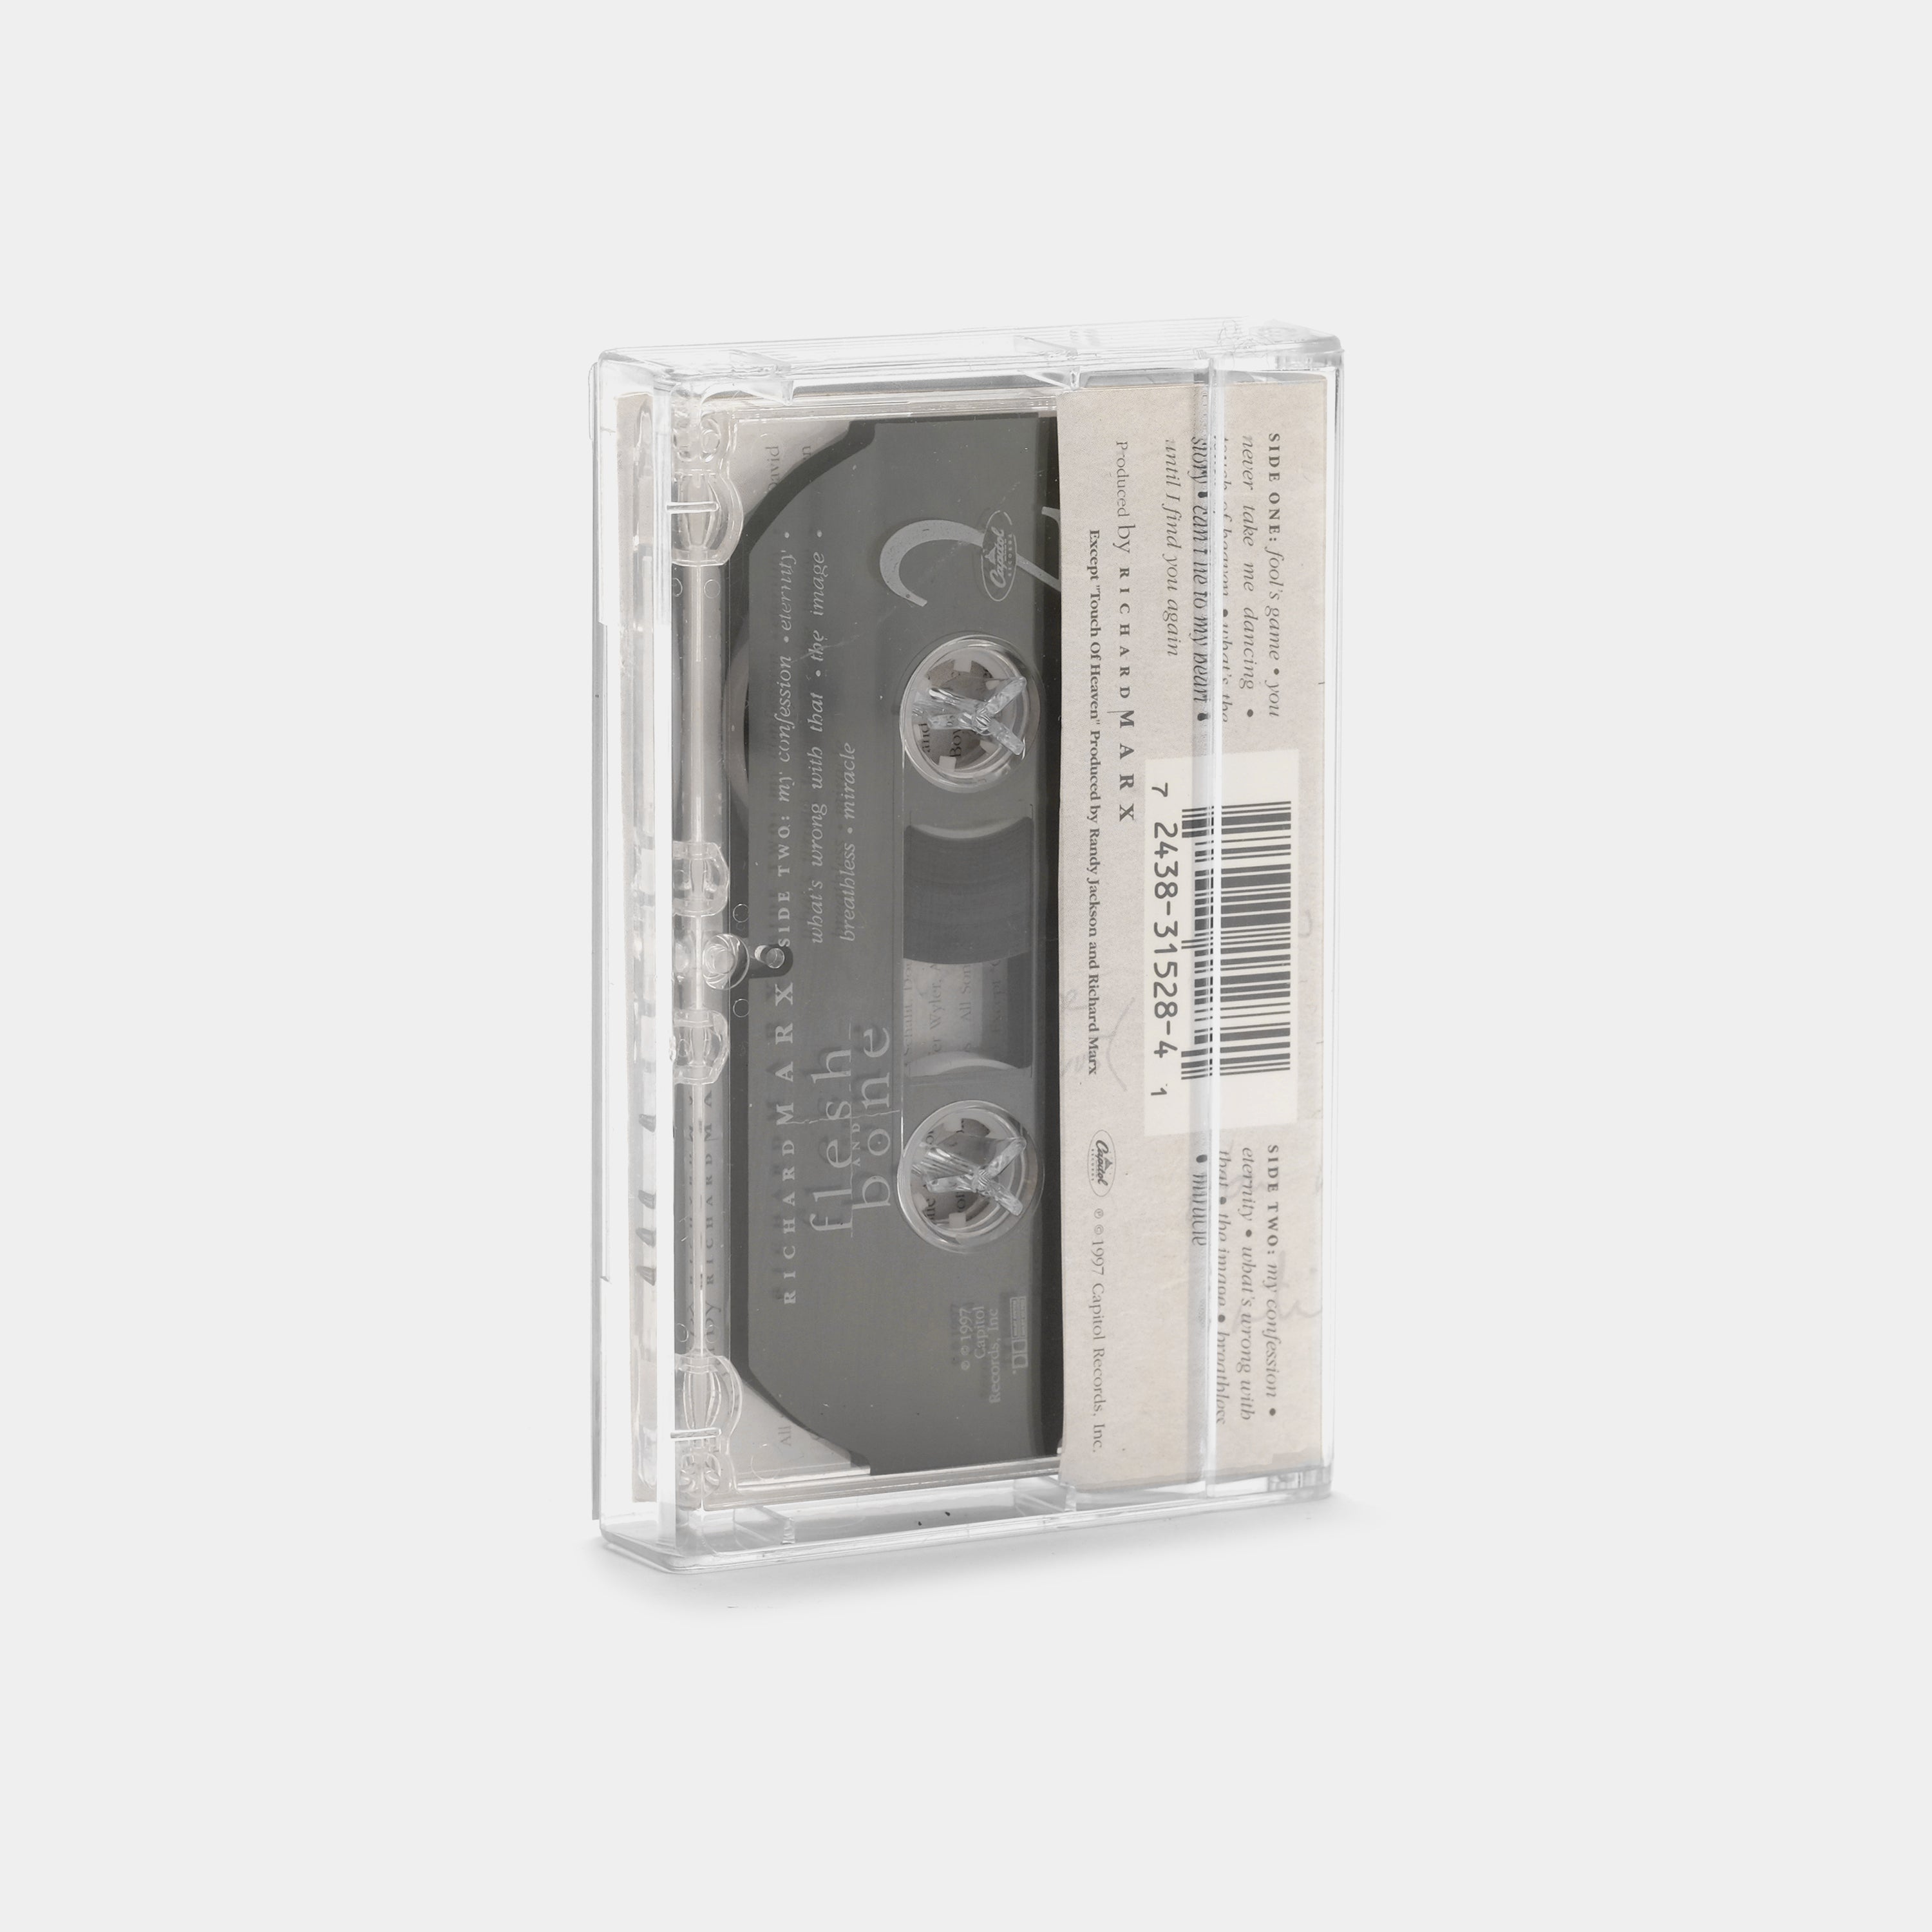 Richard Marx - Flesh and Bone Cassette Tape